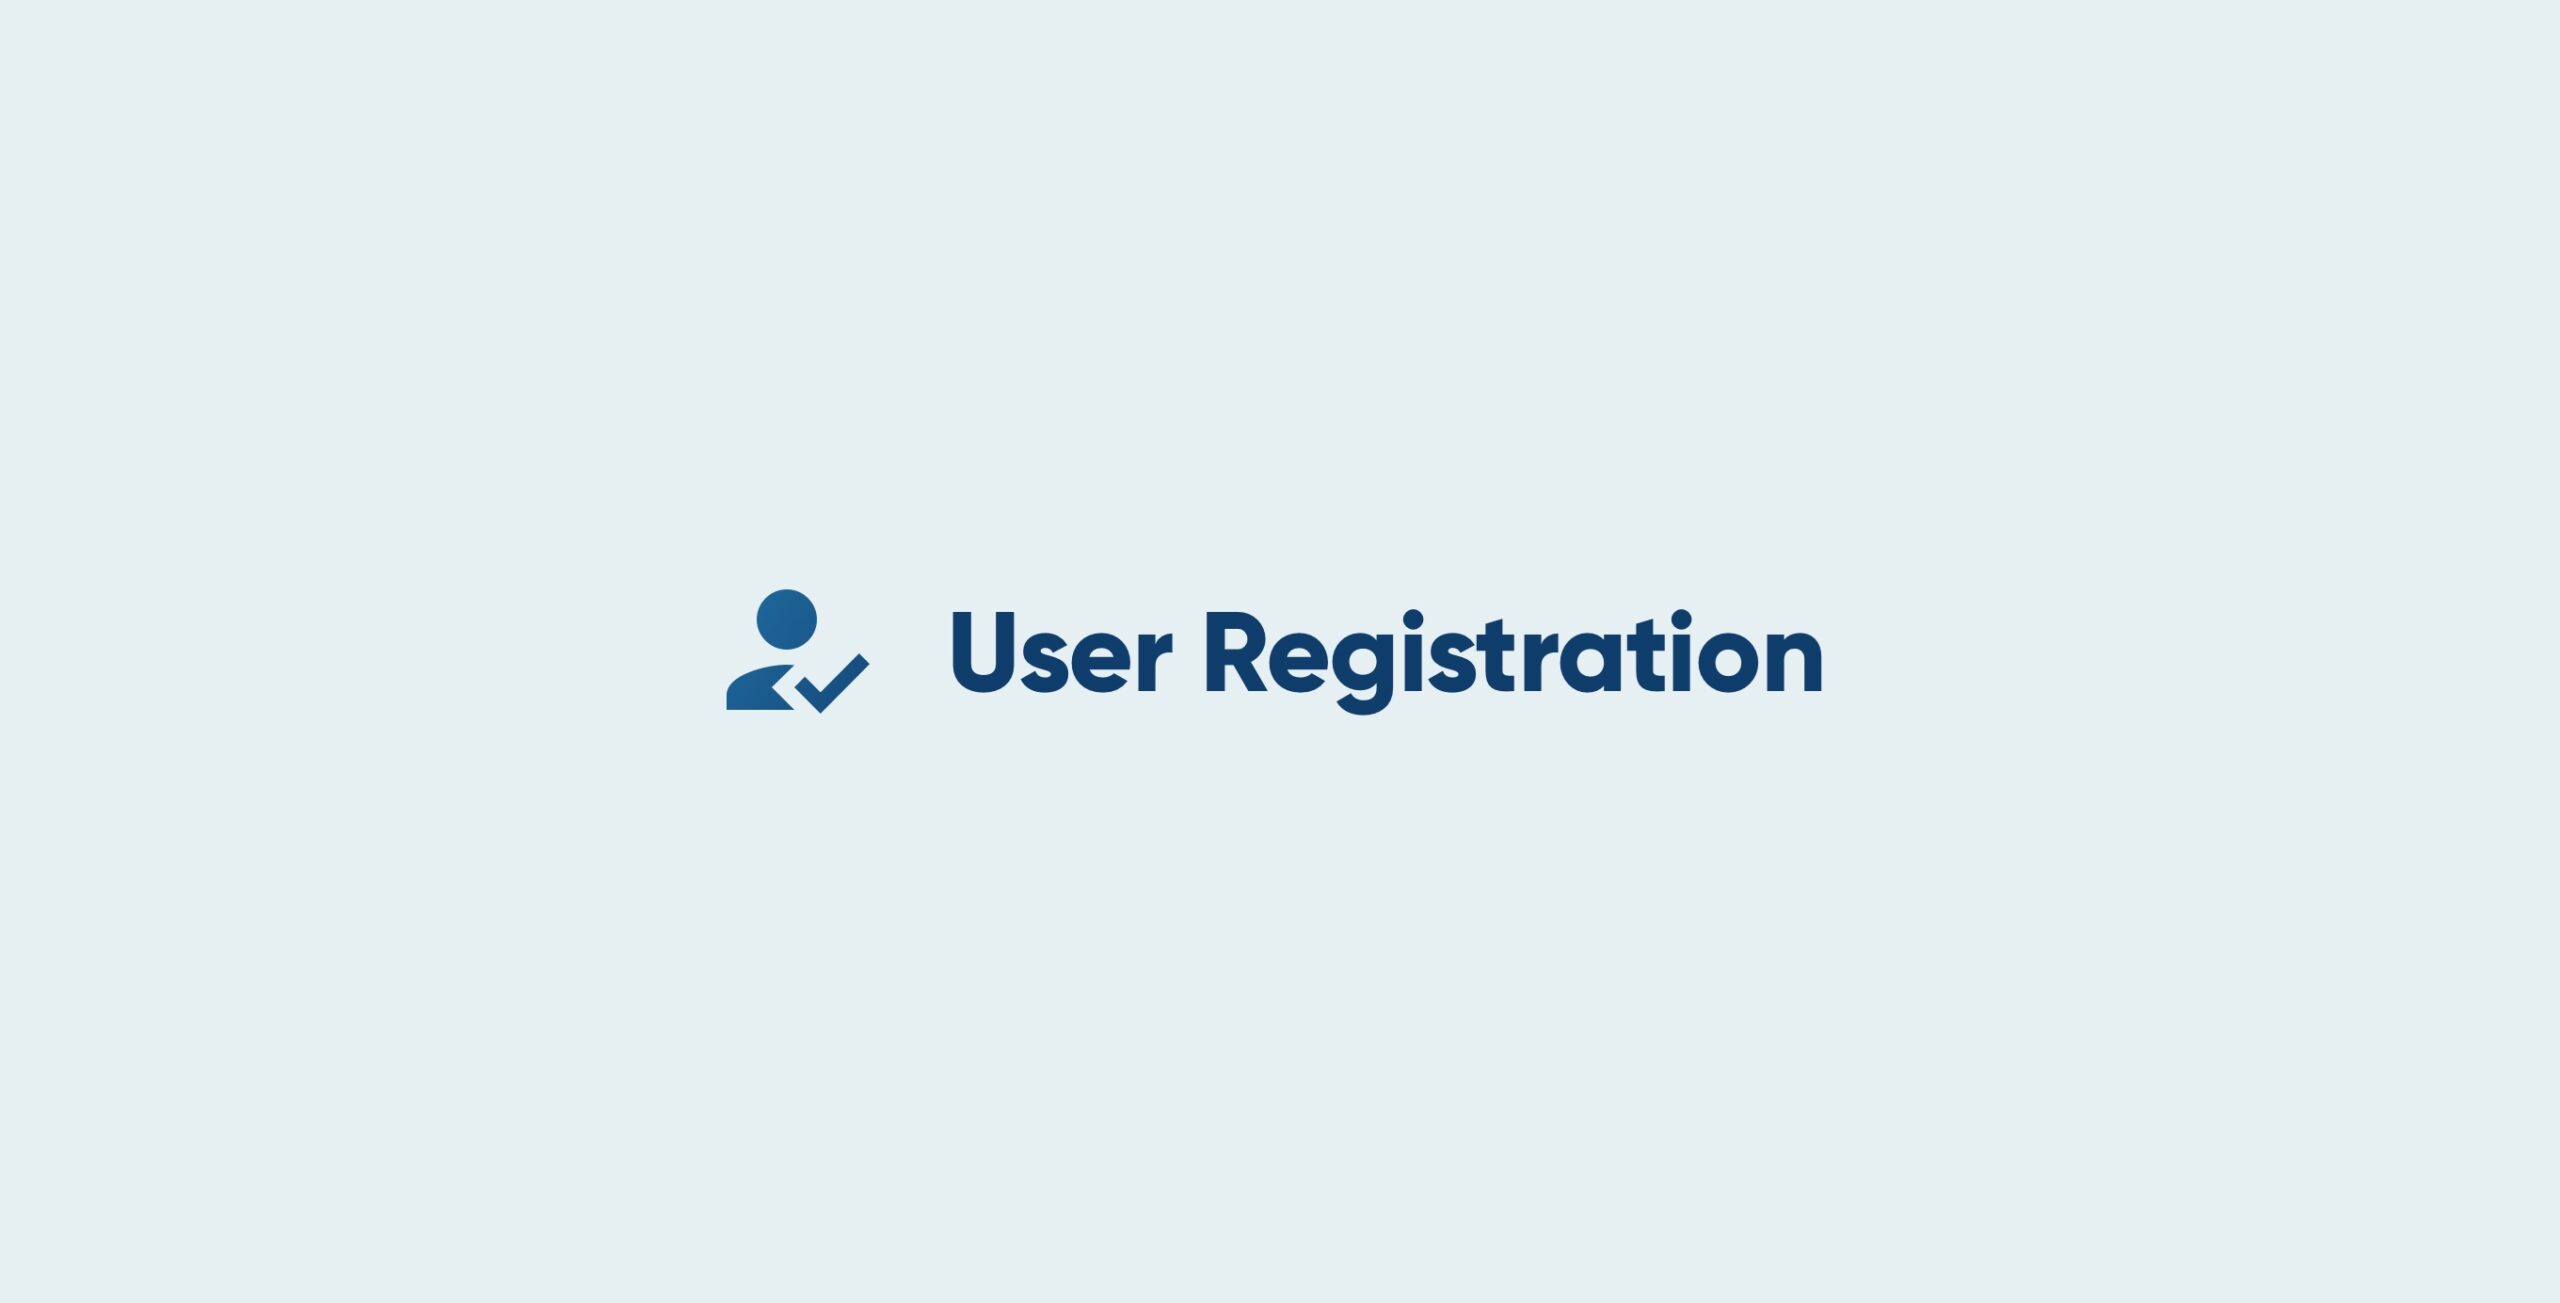 User Registration